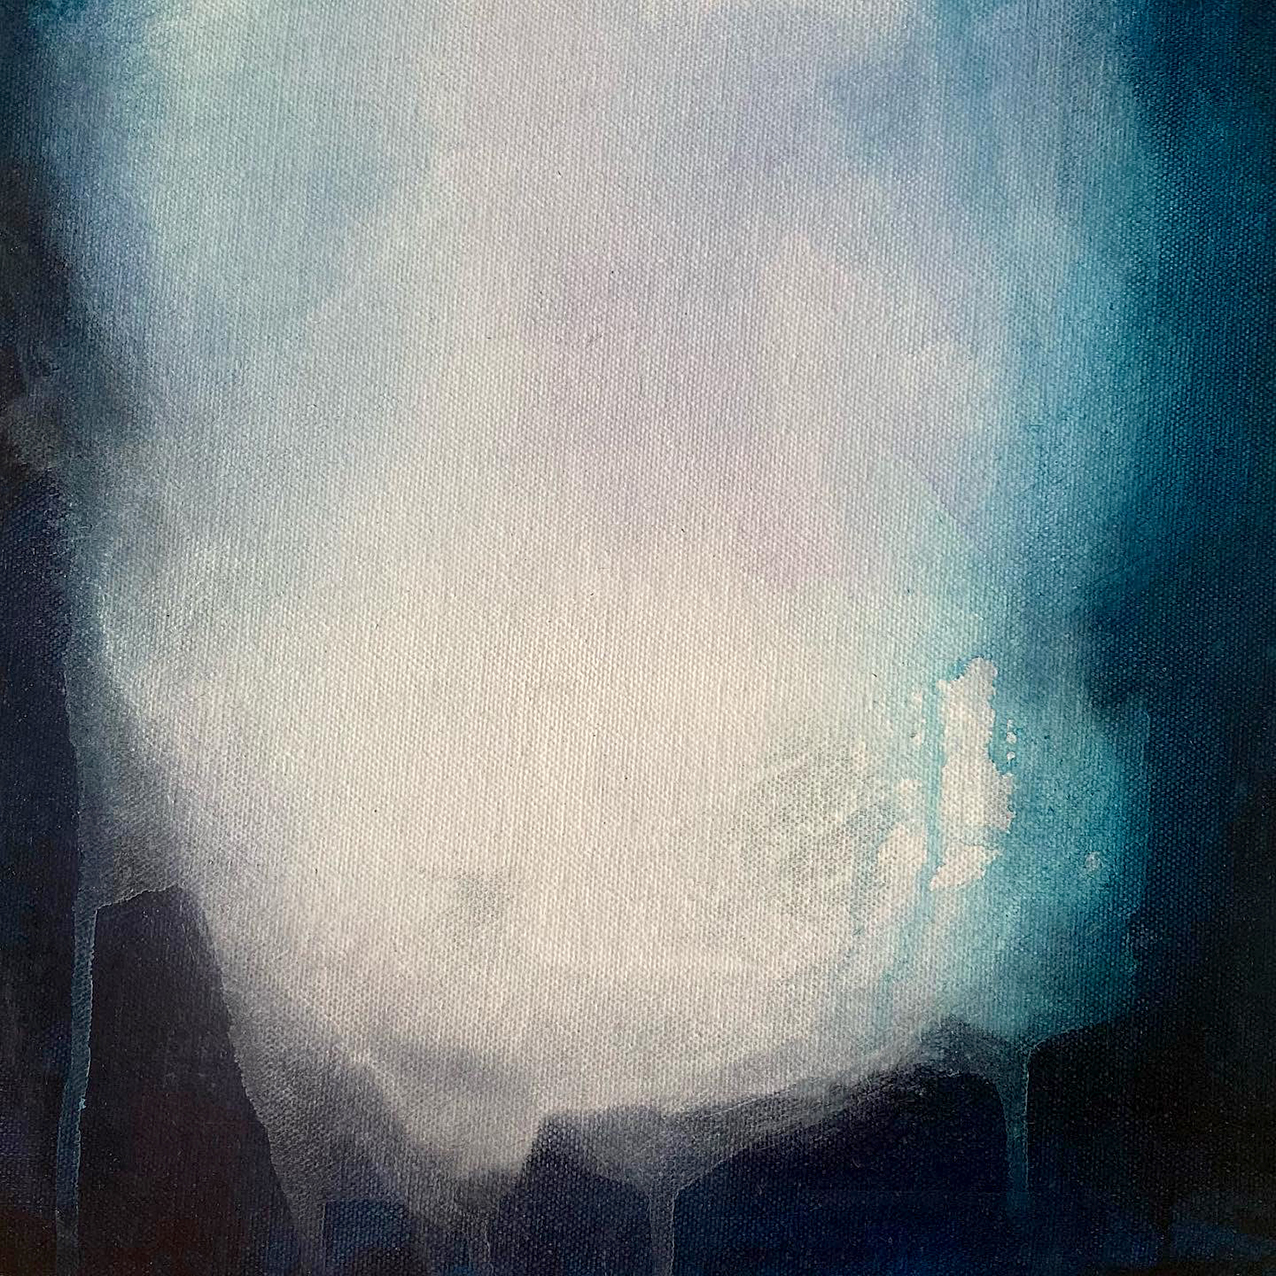 Ocean Light 3 by Anita Jokovich | Lethbridge 20000 2021 Finalists | Lethbridge Gallery